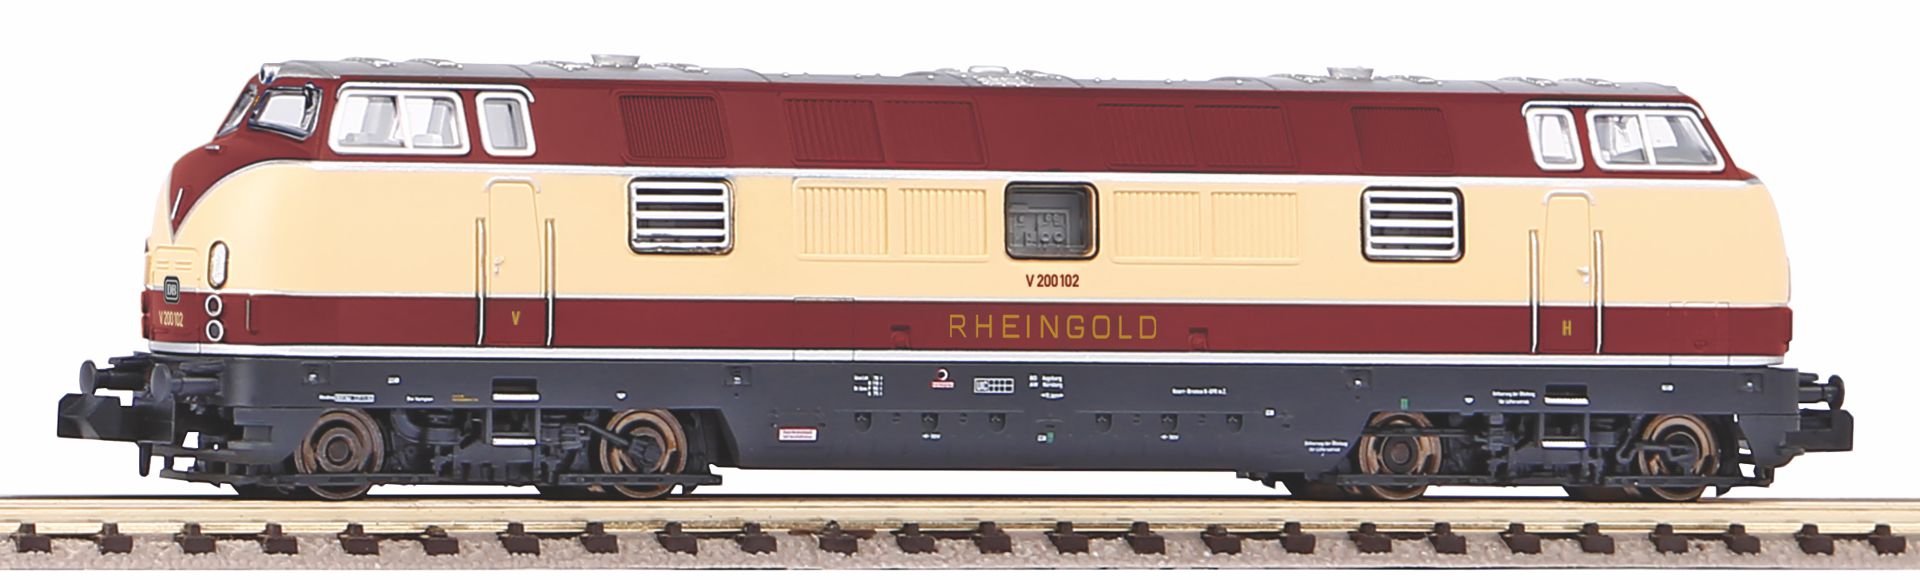 Piko 71607 - Diesellok V 200 102, DB, Ep.III 'Rheingold', rot-creme, DC-Sound